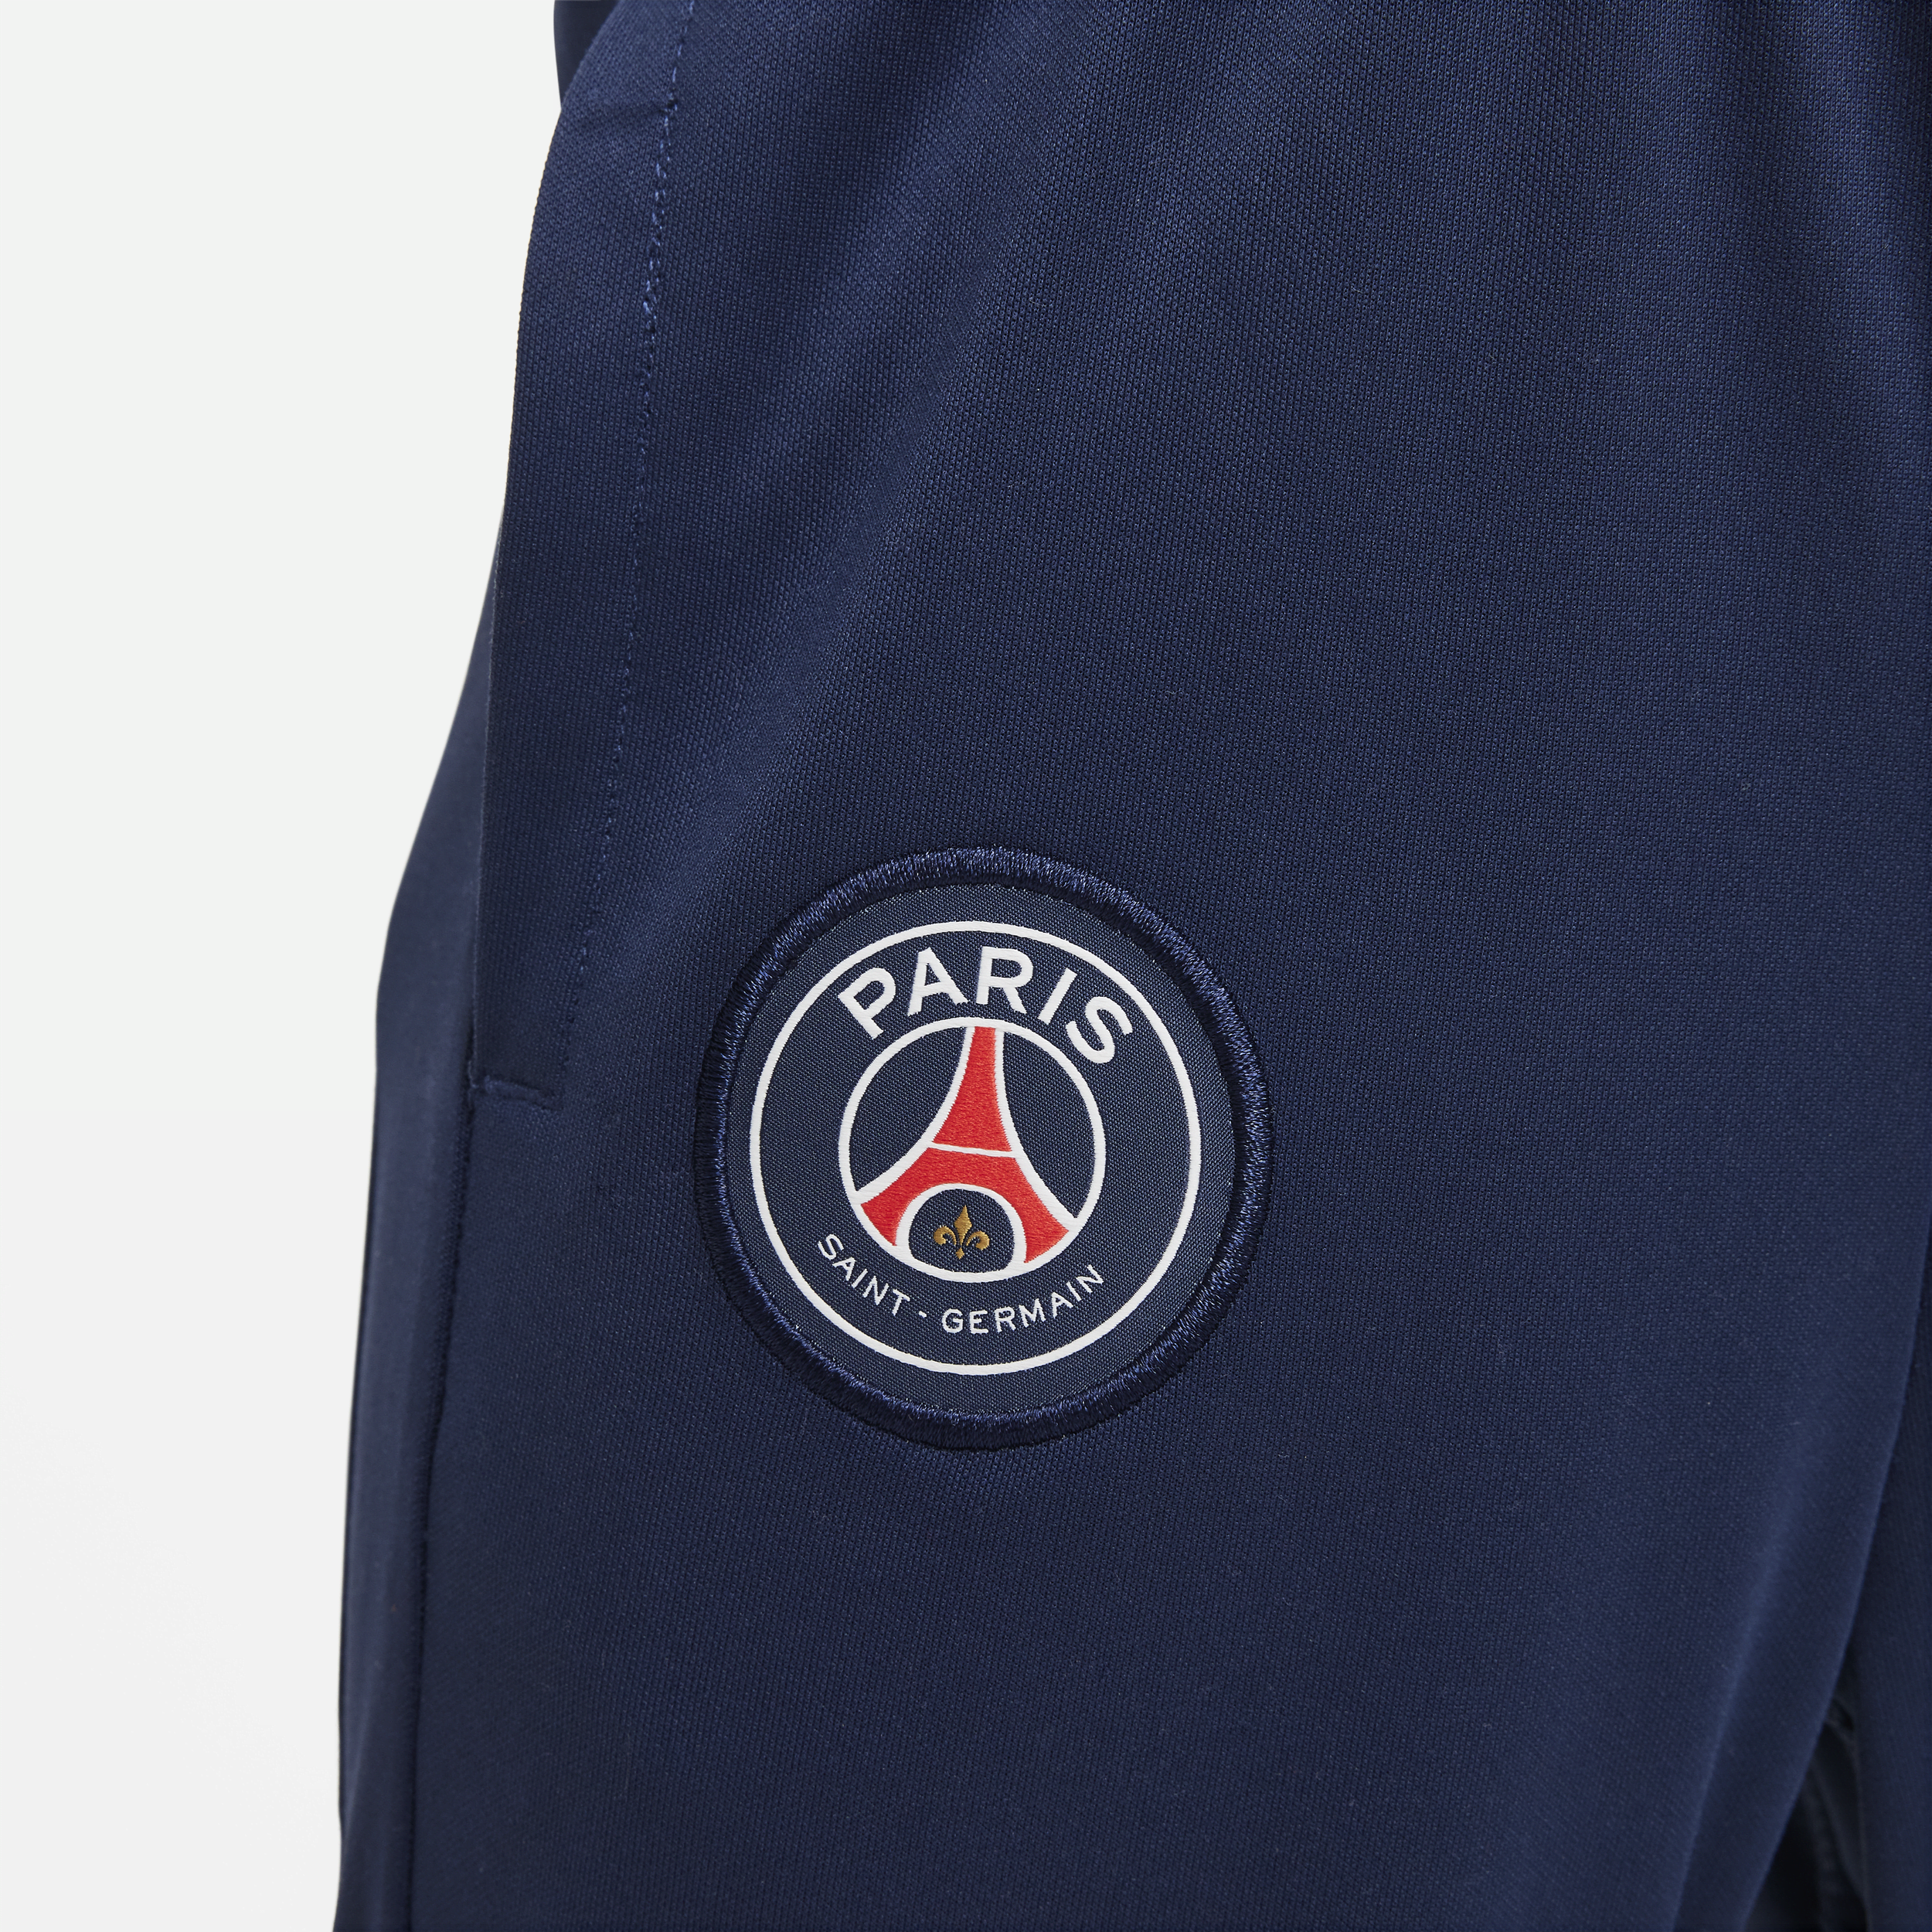 Nike Paris Saint-Germain Academy Pro Dri-FIT knit voetbalbroek voor kleuters Blauw